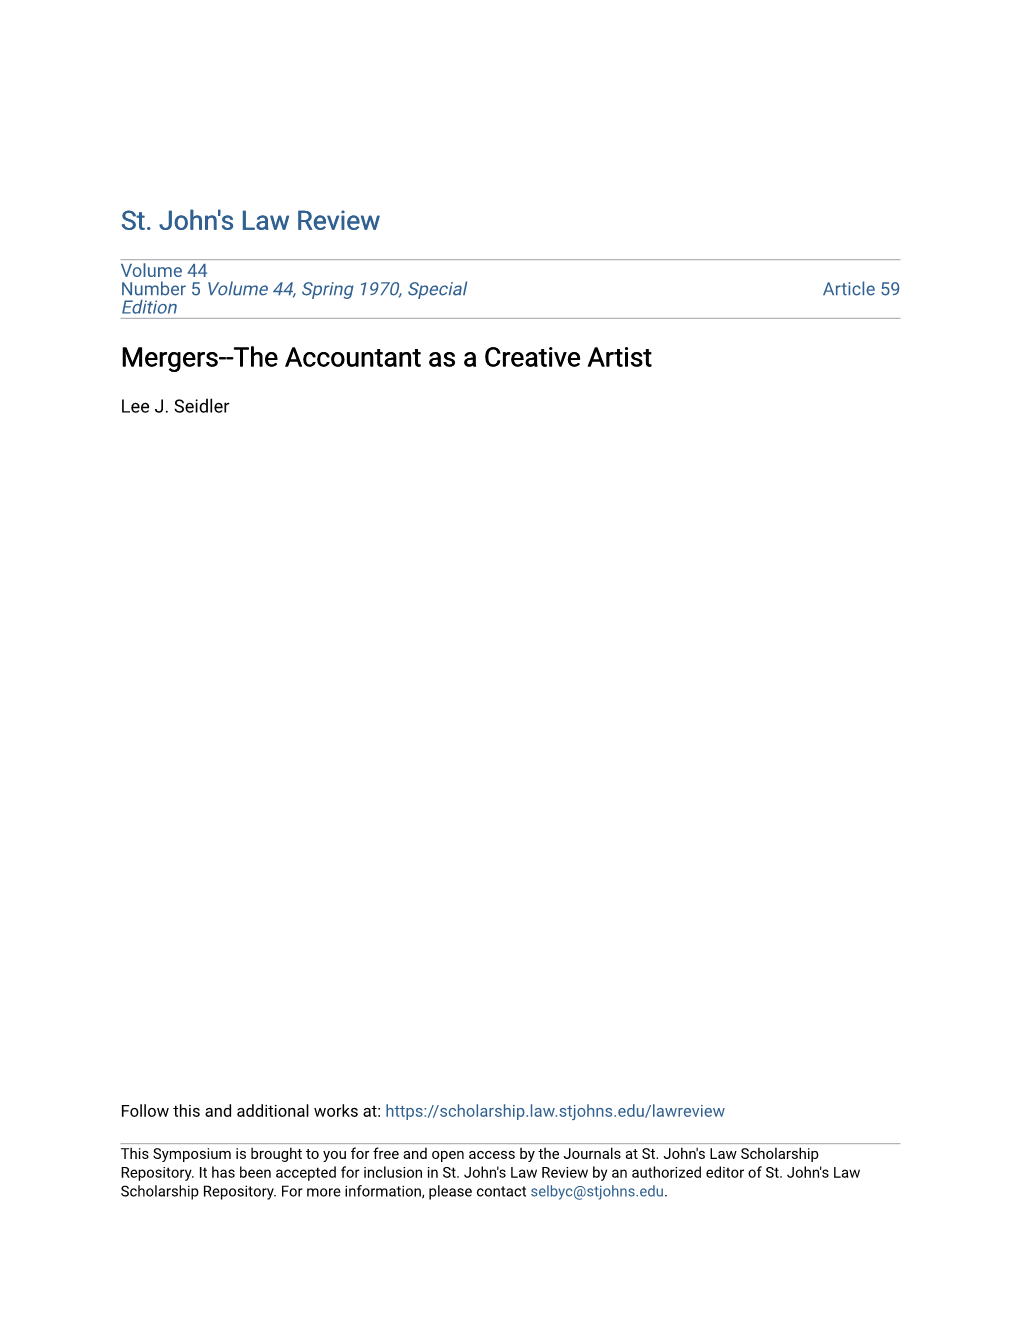 Mergers--The Accountant As a Creative Artist